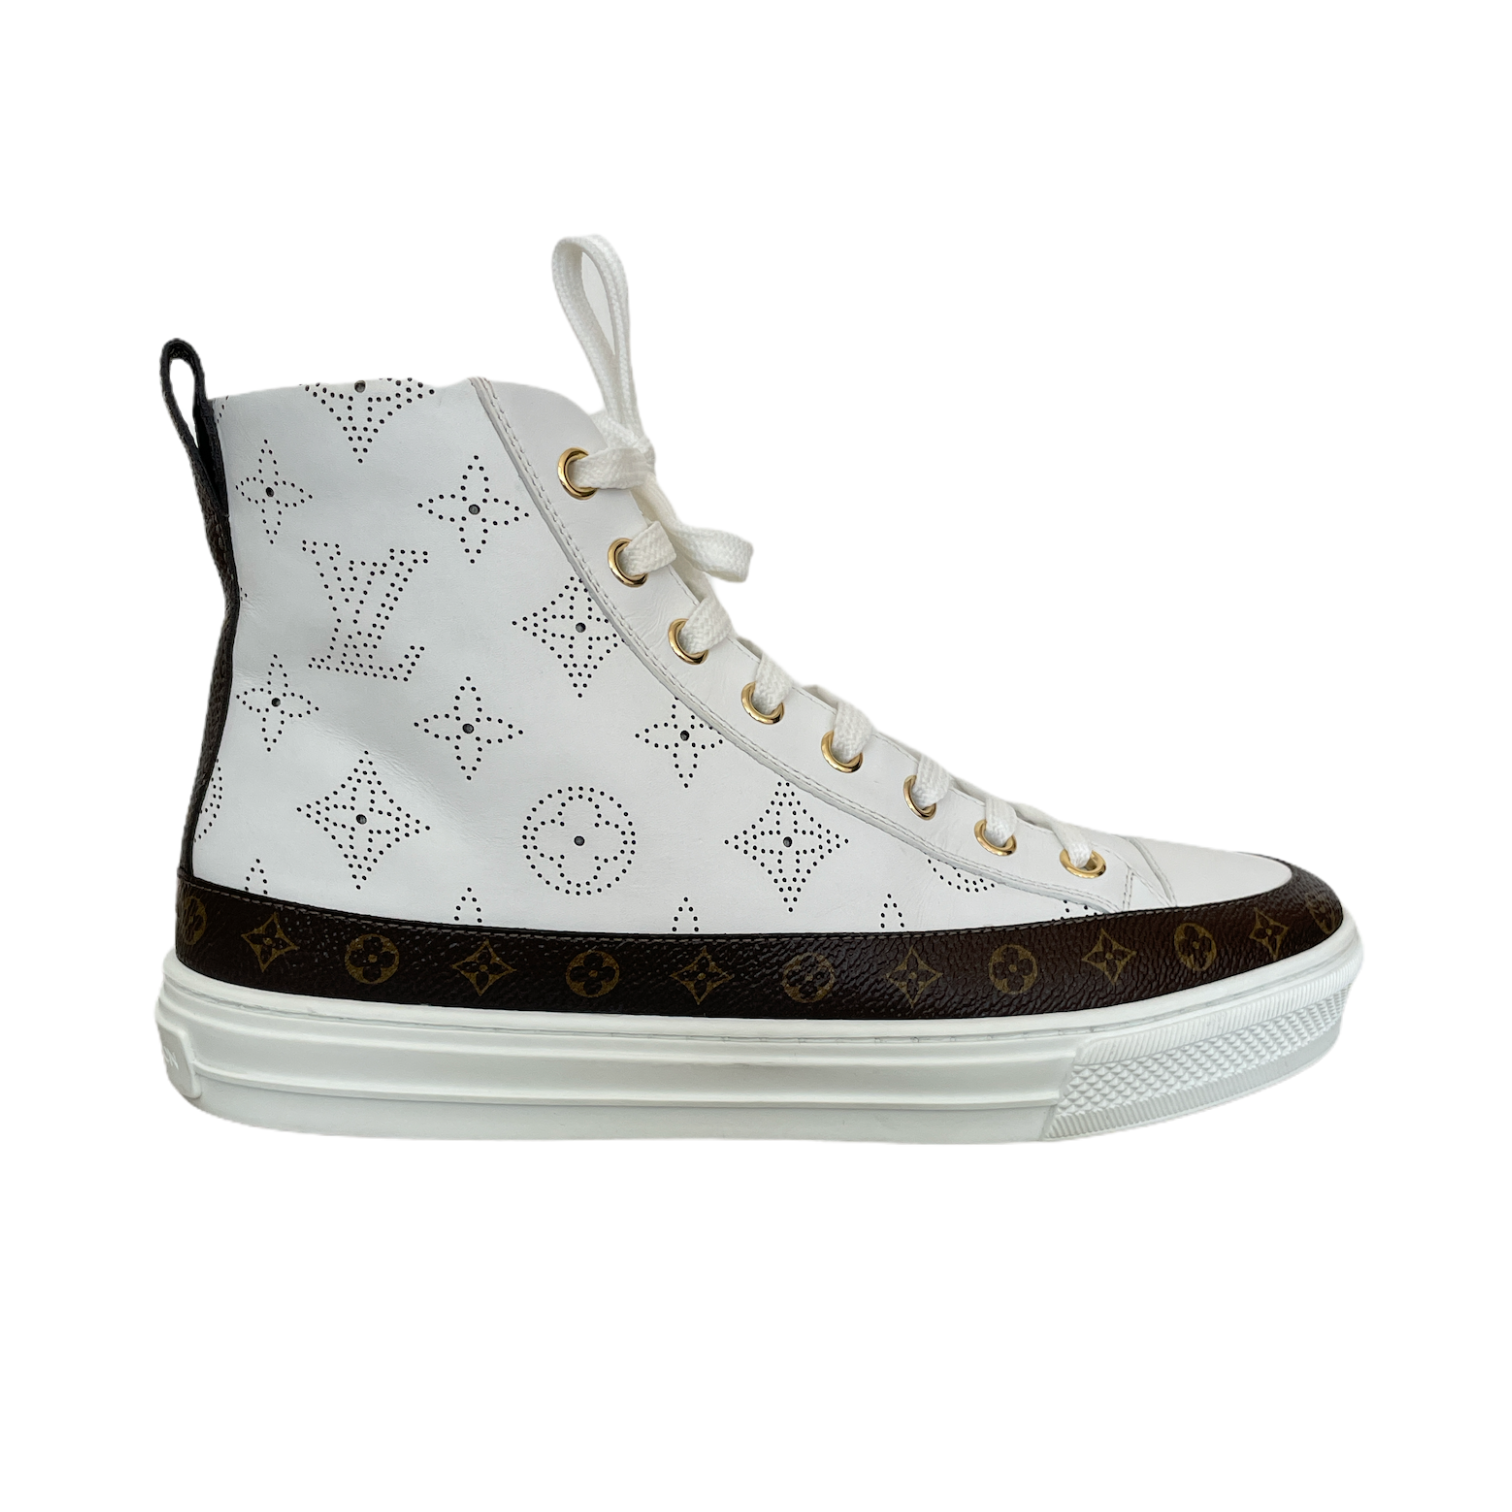 Stellar Sneaker Boot - Shoes